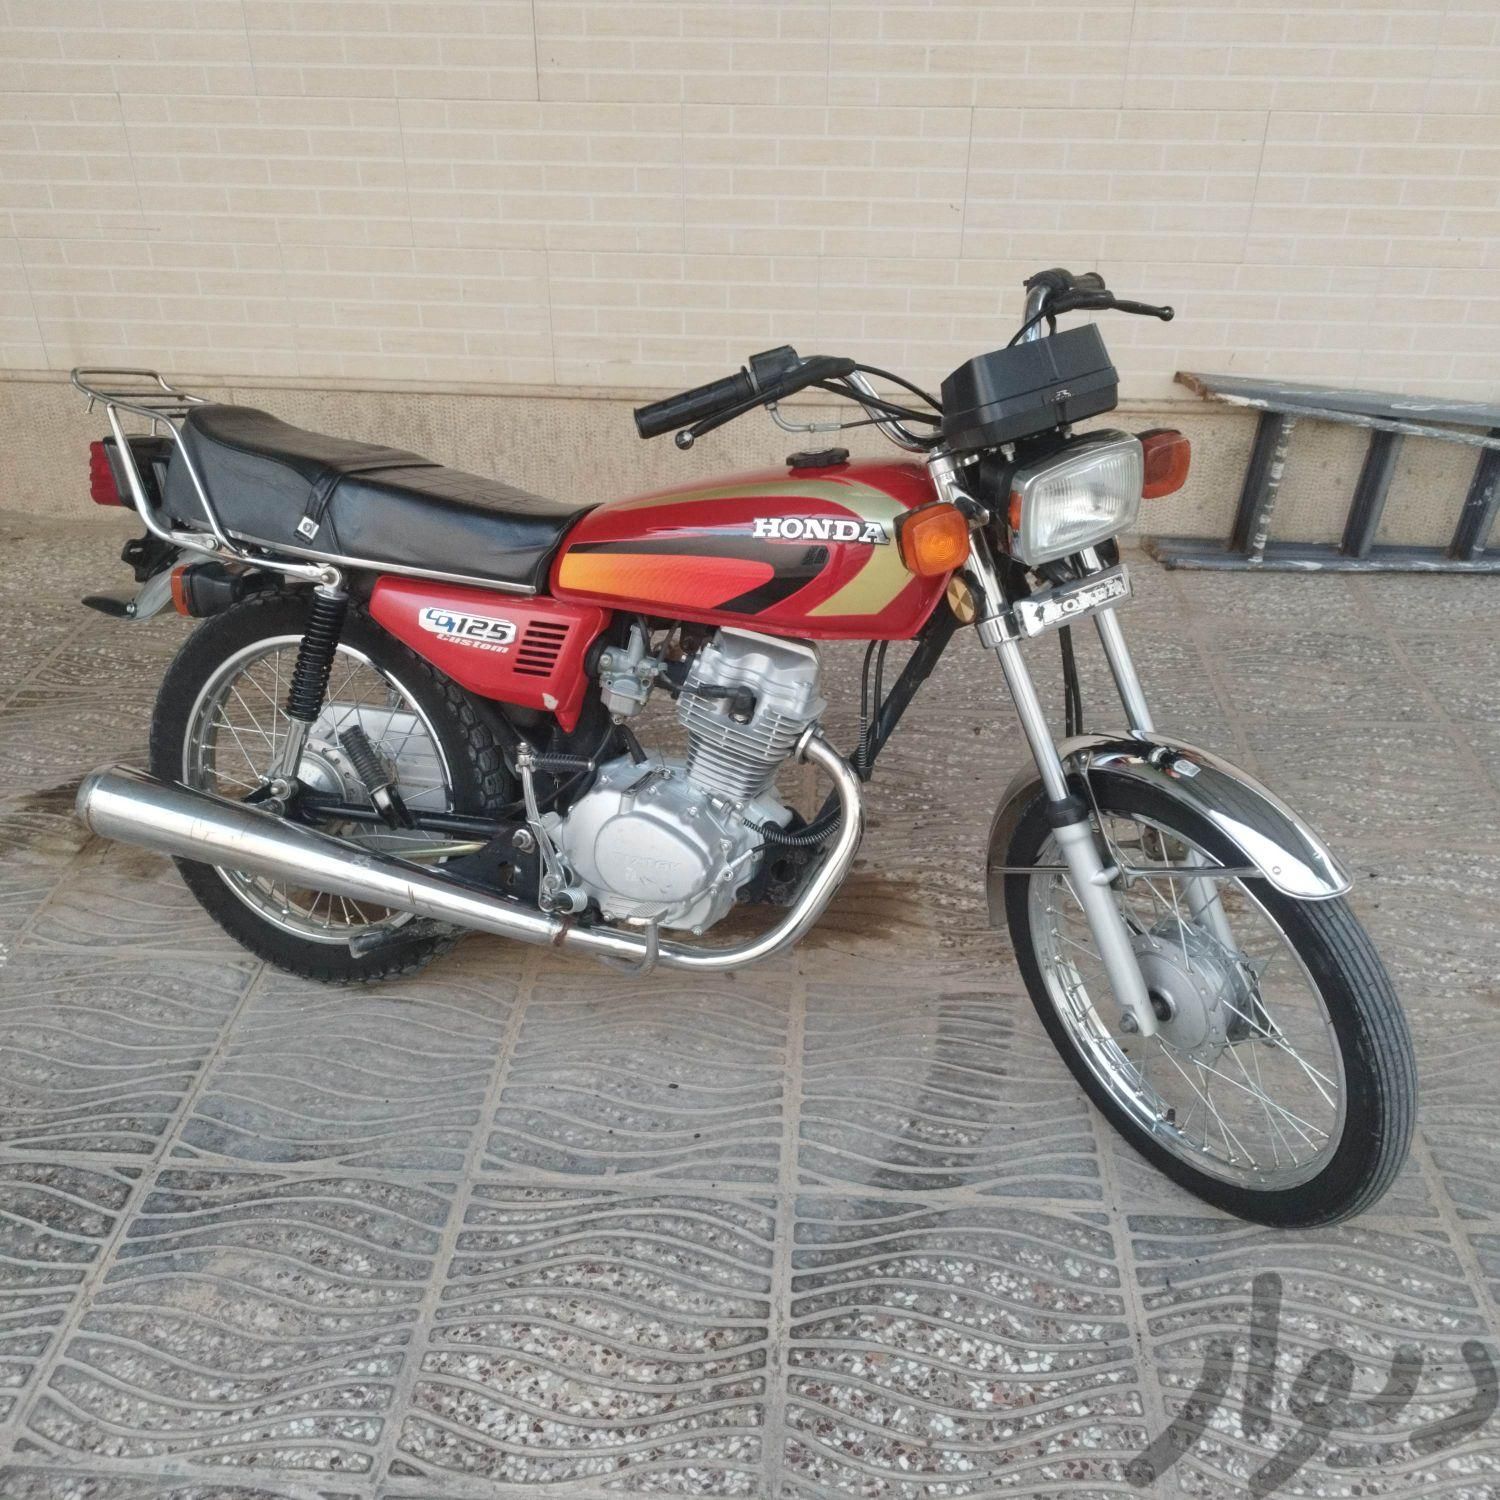 موتور سیکلت مدل۱۳۸۸|موتورسیکلت|آباده, |دیوار